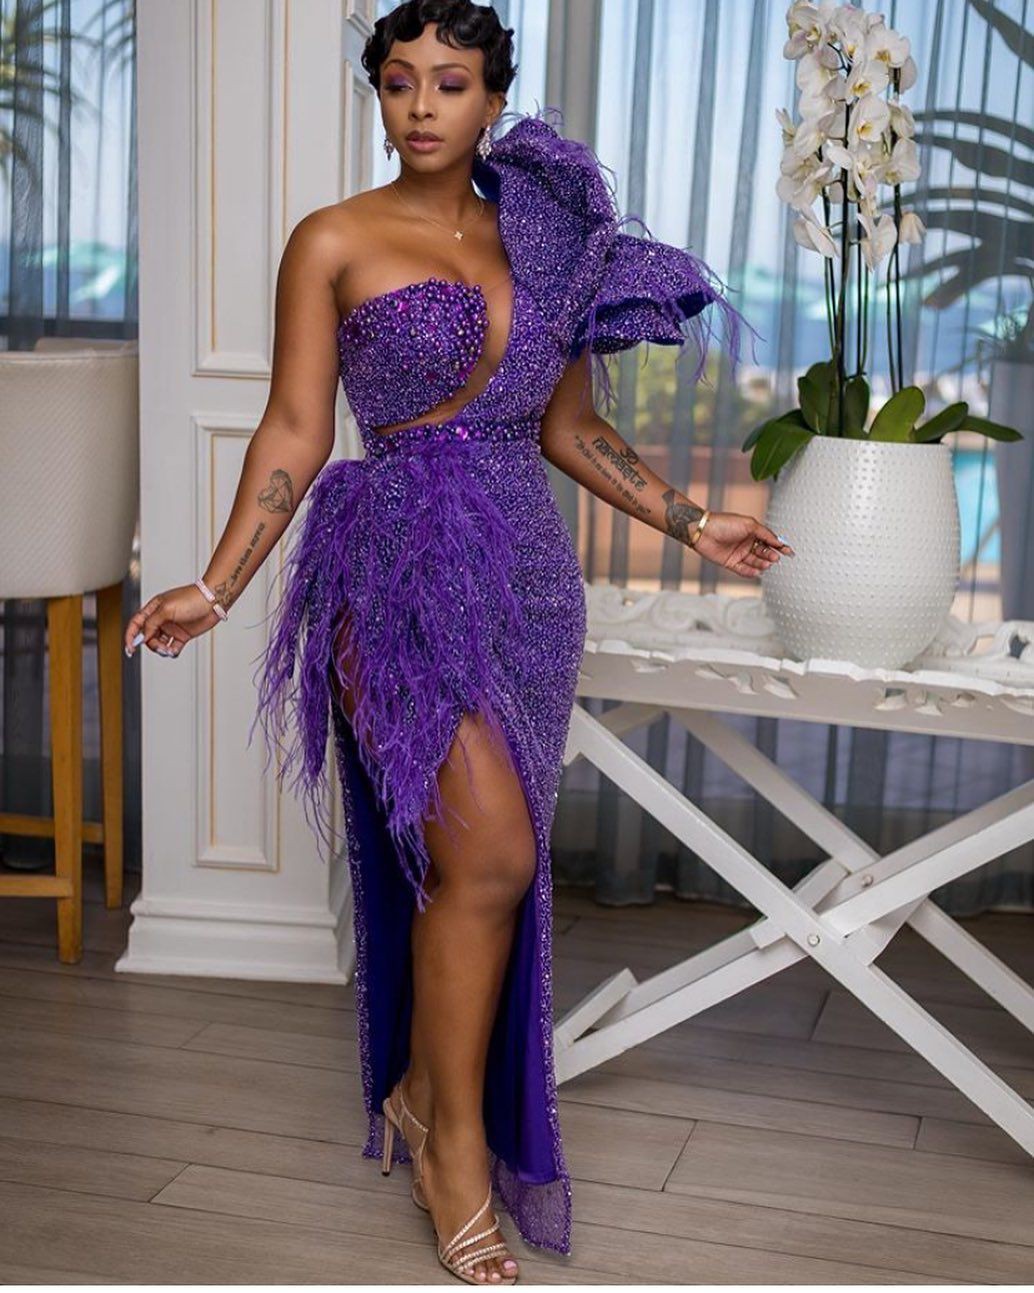 Nice to try 2019 durban july, Vodacom Durban July: Ankara Dresses,  South Africa  